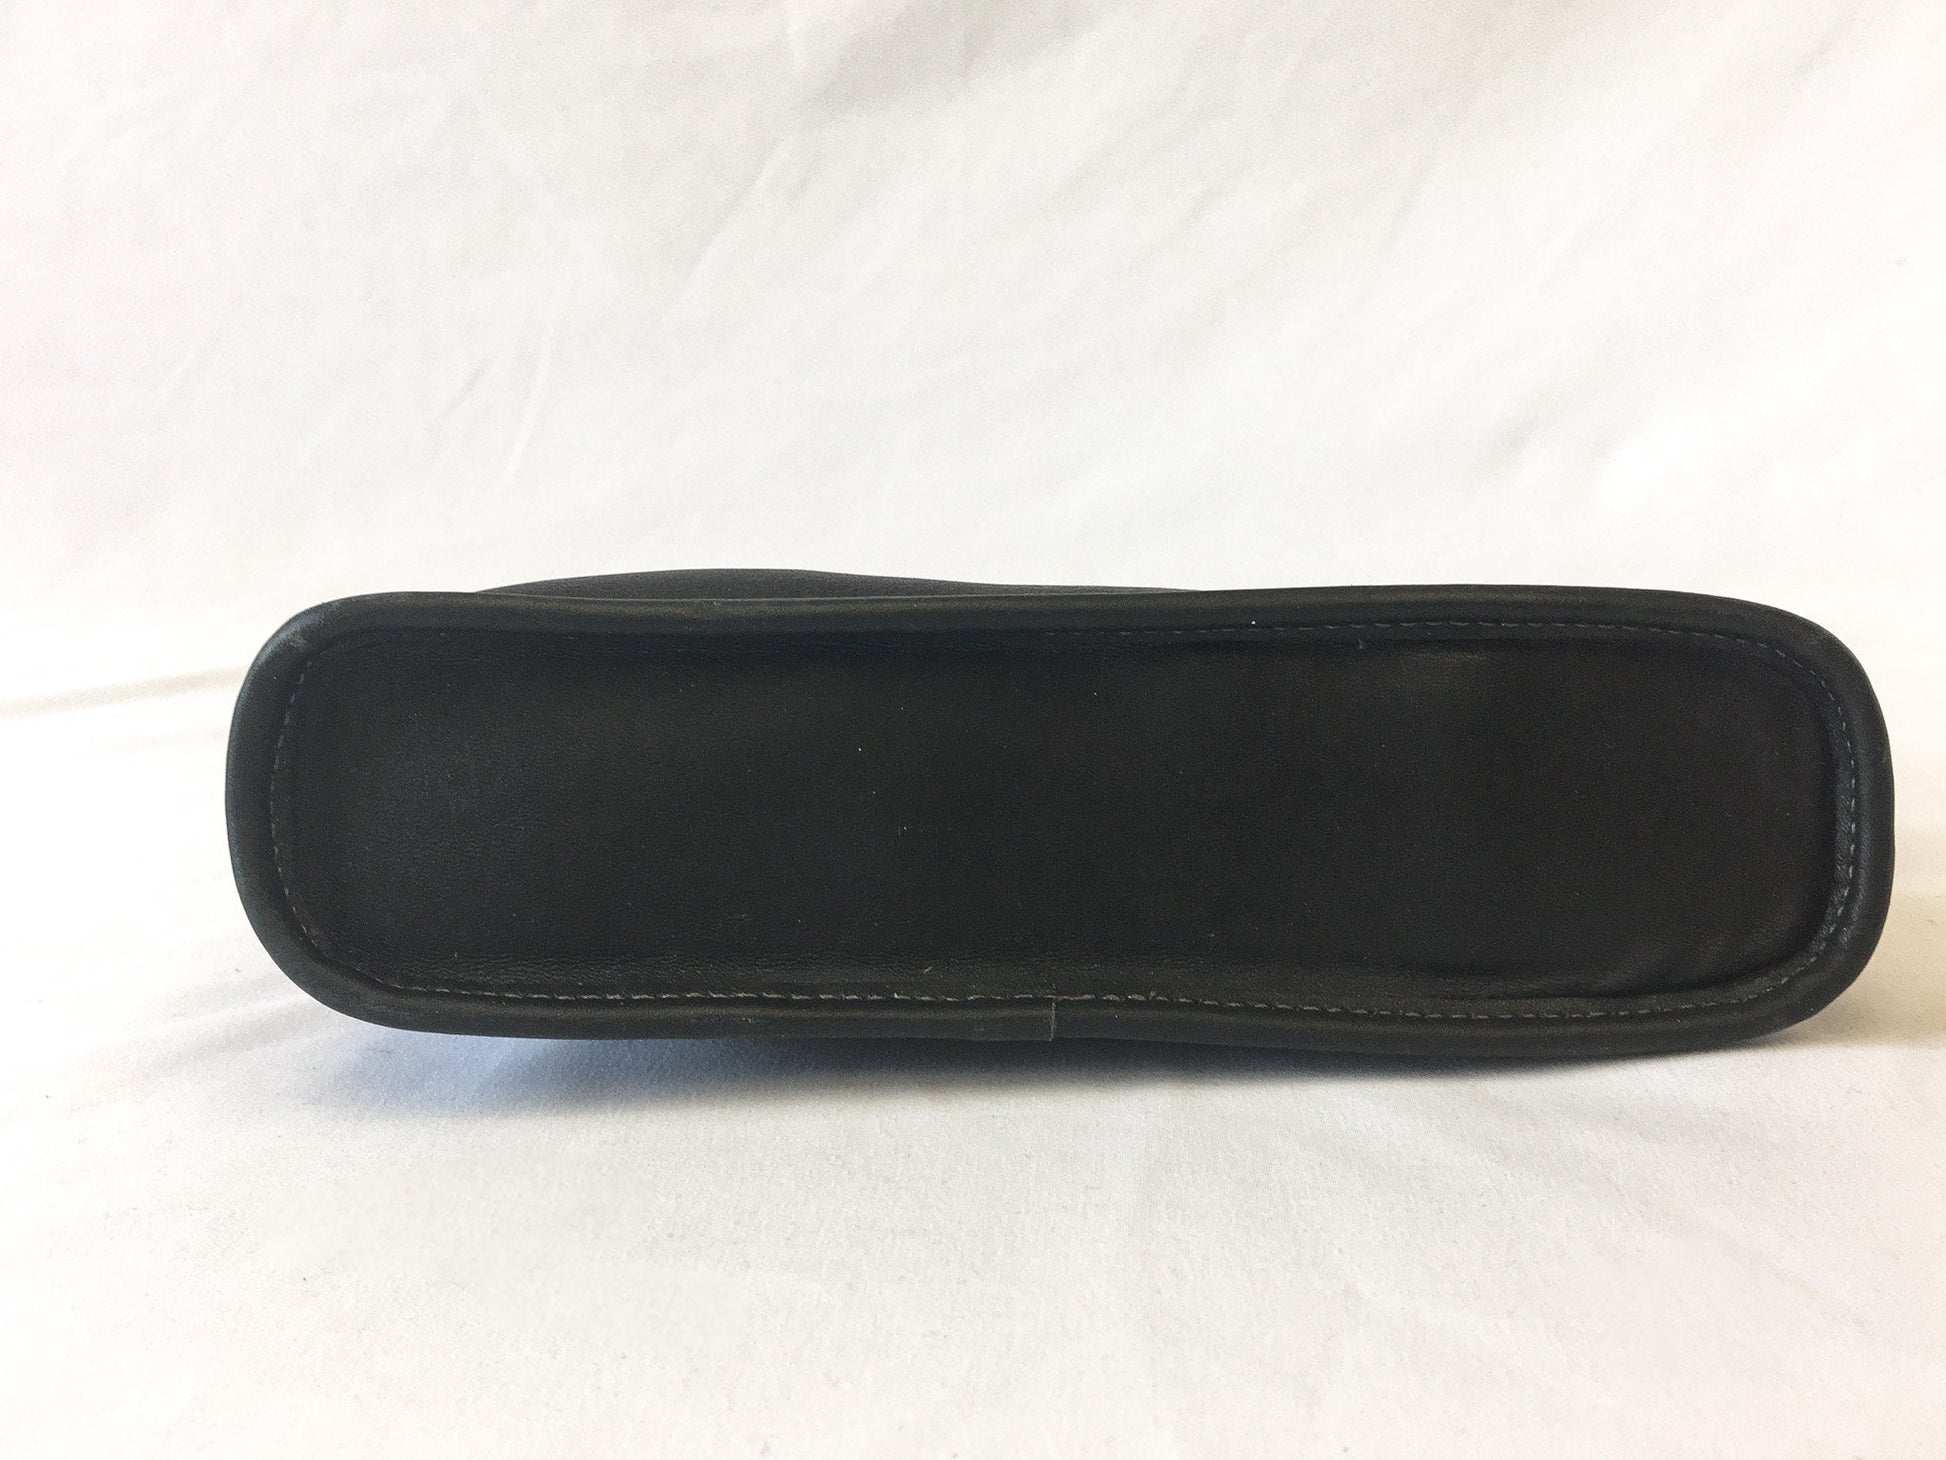 Vintage COACH Bleeker Black Leather Bag, Style #9311, Vintage Coach Clutch Handbag